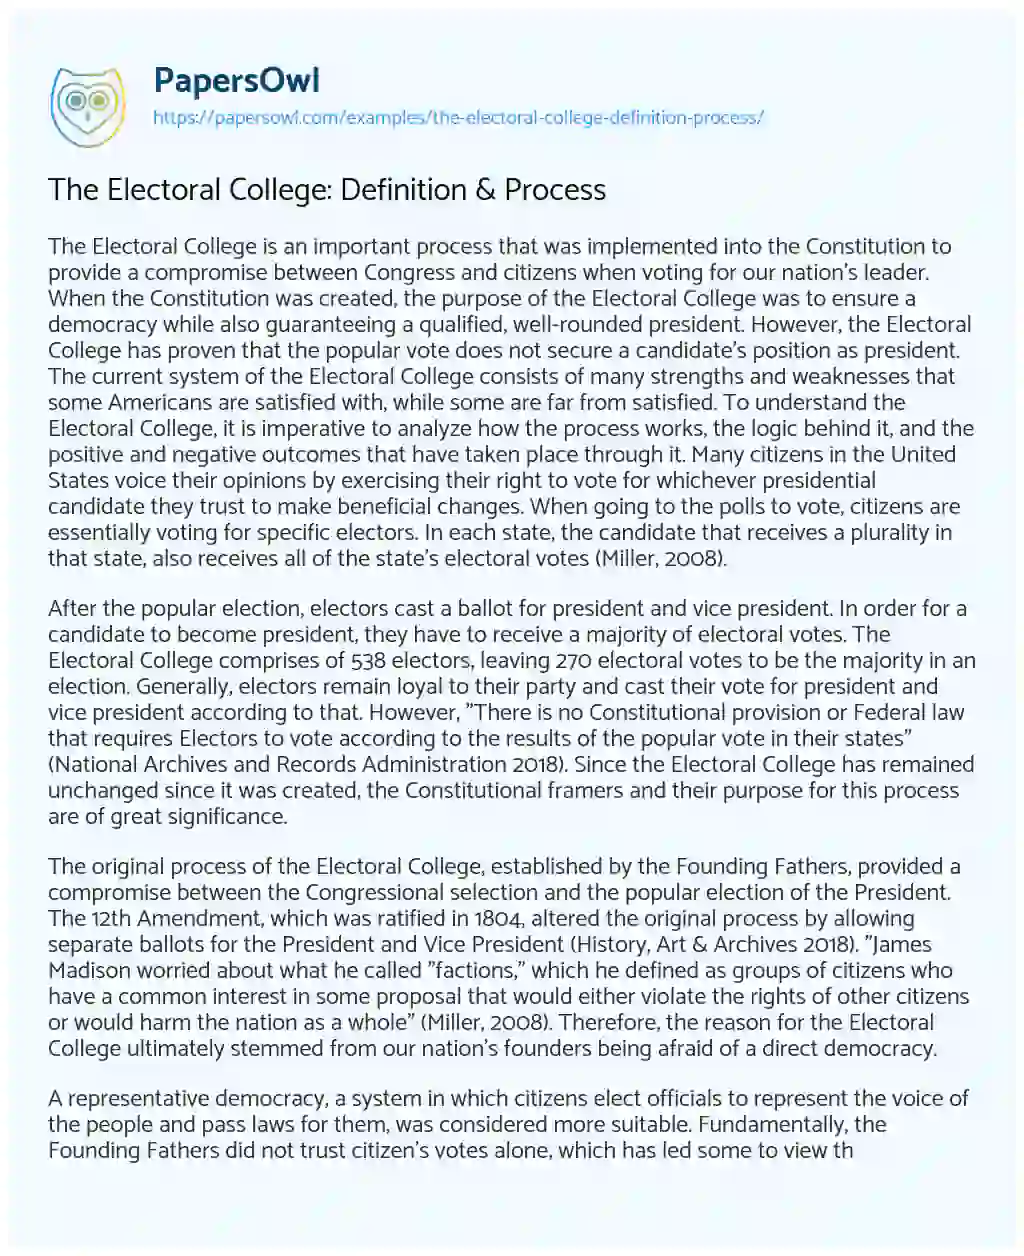 The Electoral College: Definition & Process essay